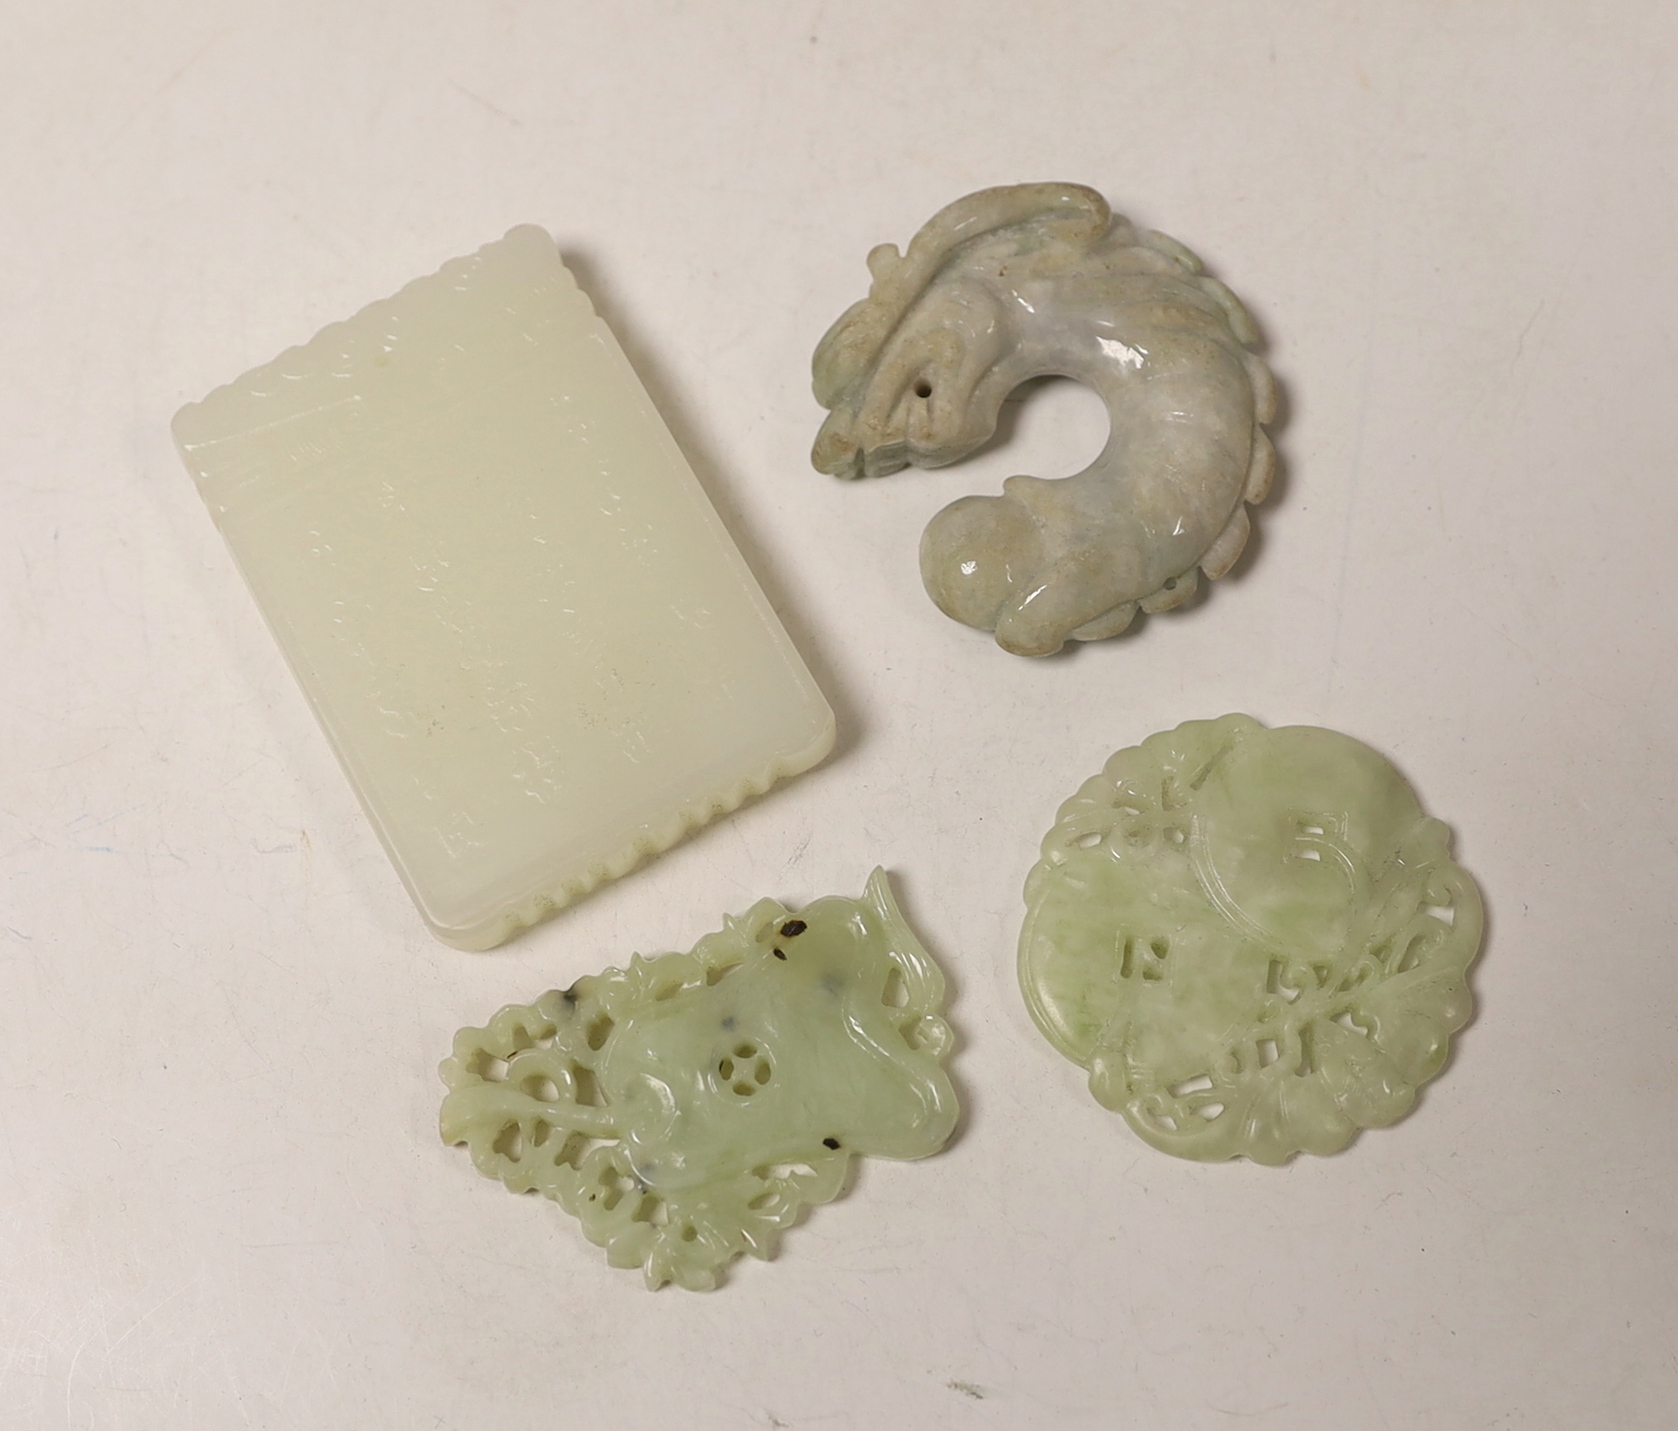 A Chinese white jade pendant plaque and three jadeite pendants, largest 7cm